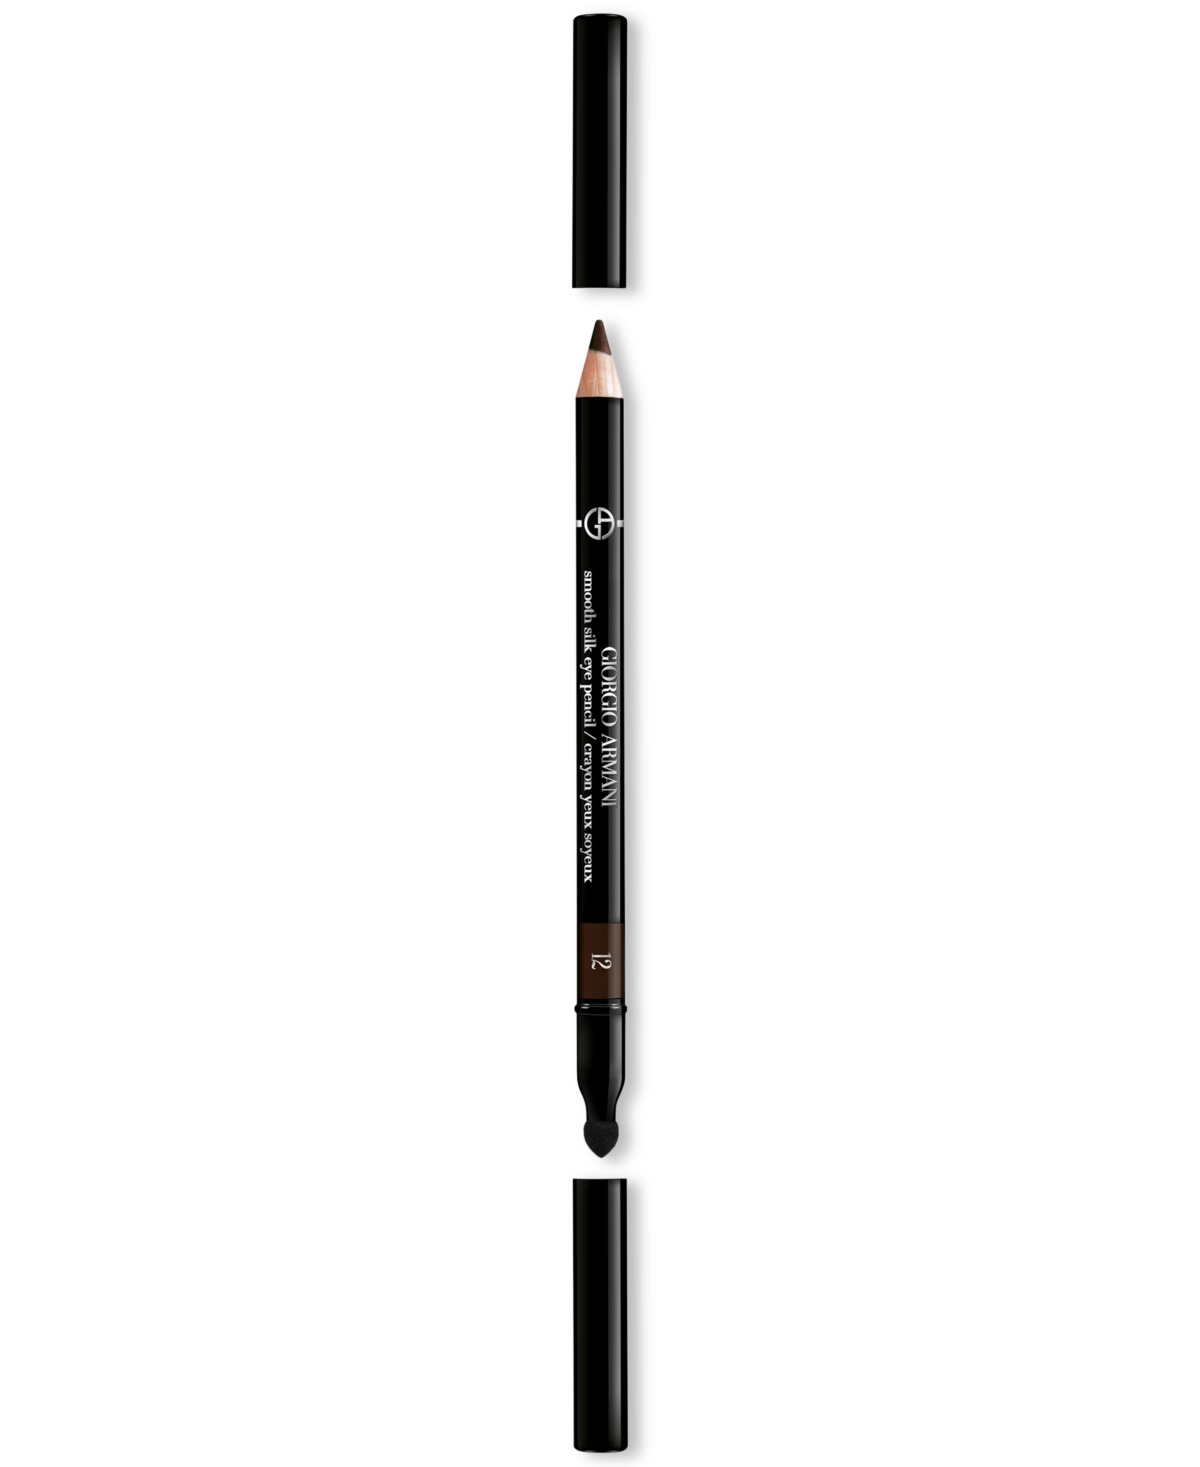 Armani Beauty Smooth Silk Eye Pencil - (Brown)